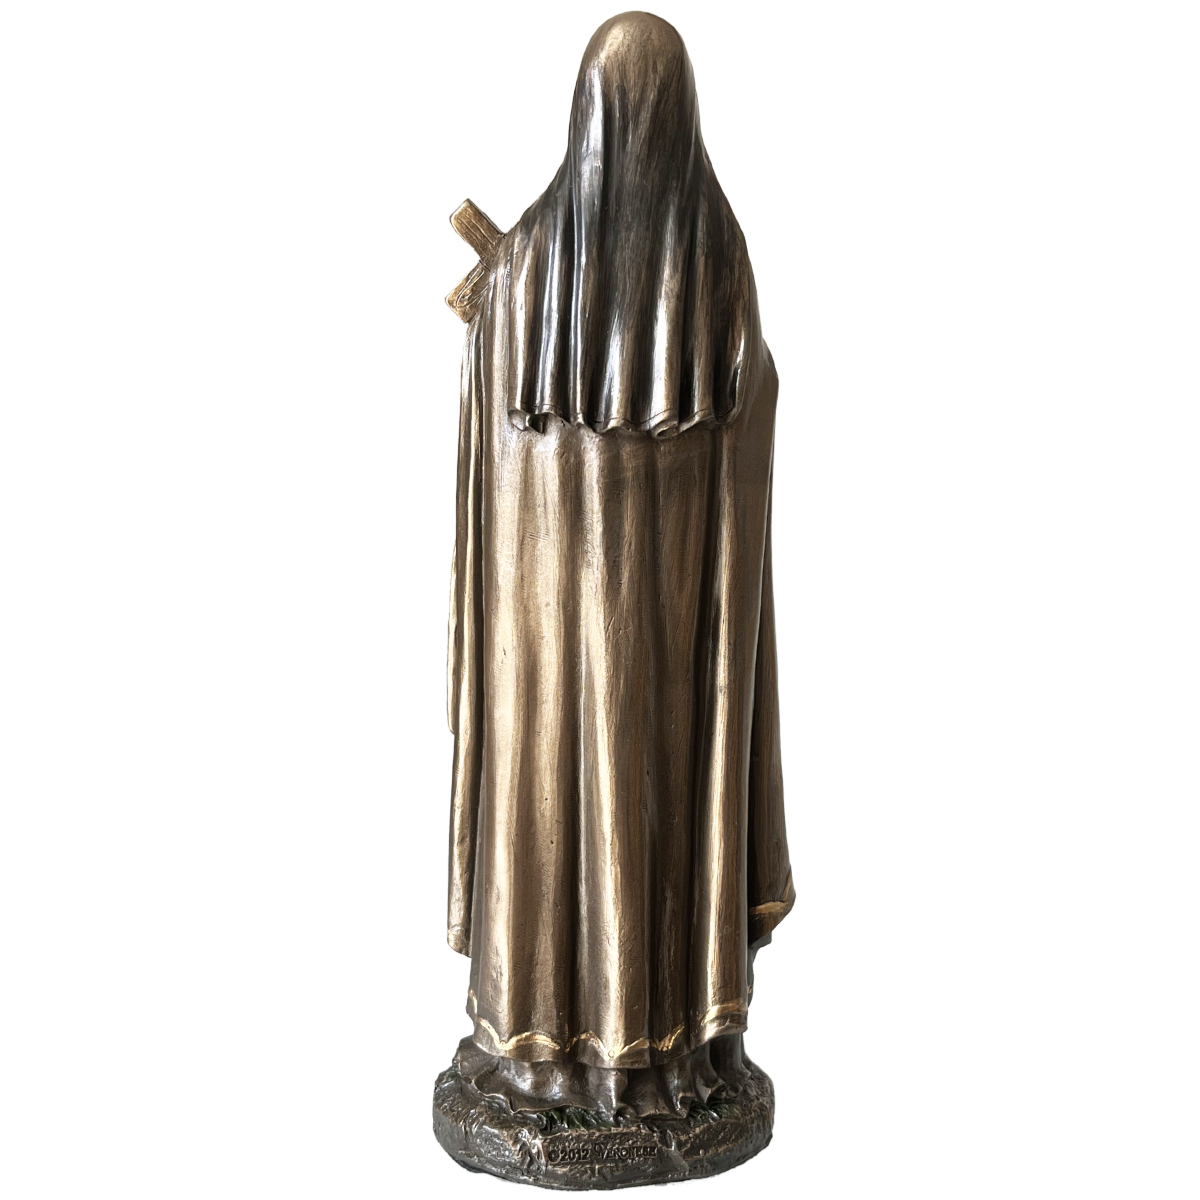 Statuette Sainte Thrse de couleur bronze